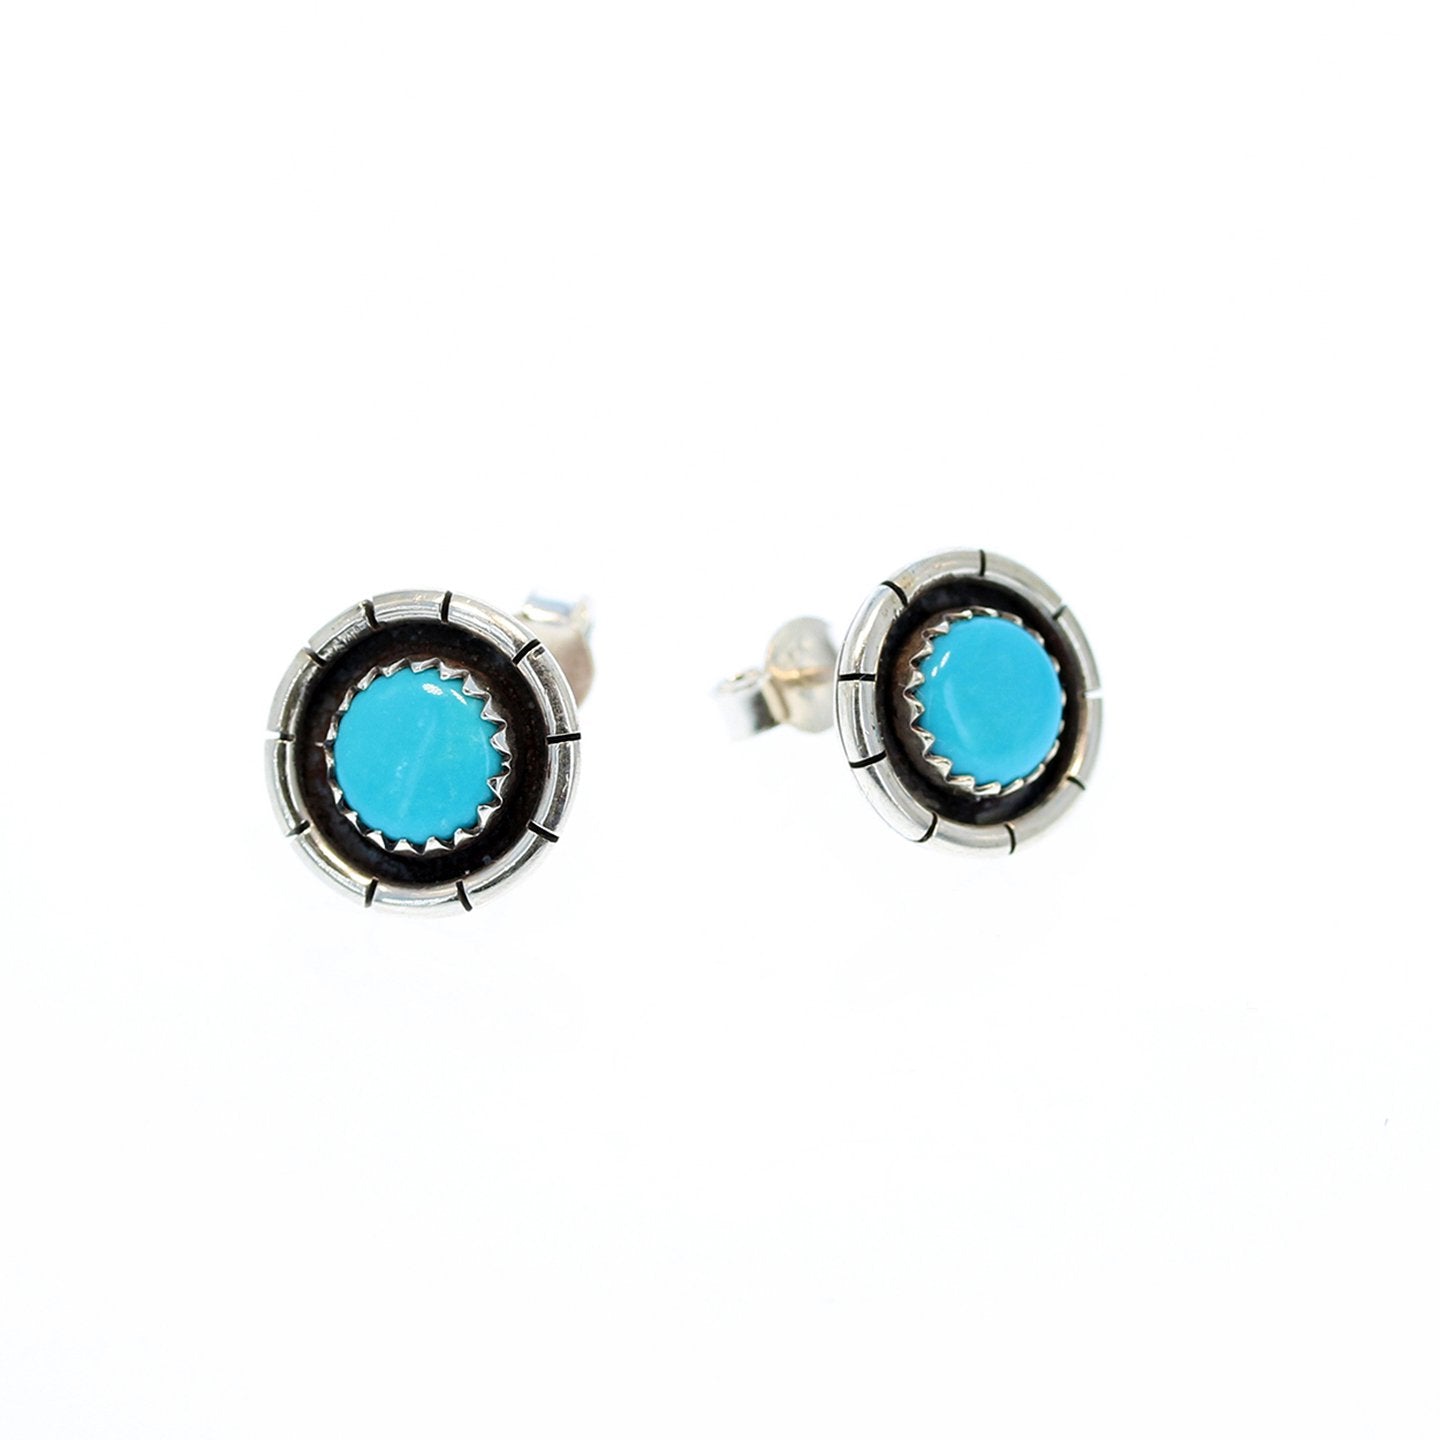 SLEEPING BEAUTY Turquoise Earrings Round Post Style Studs 7mm -NewWorldGems